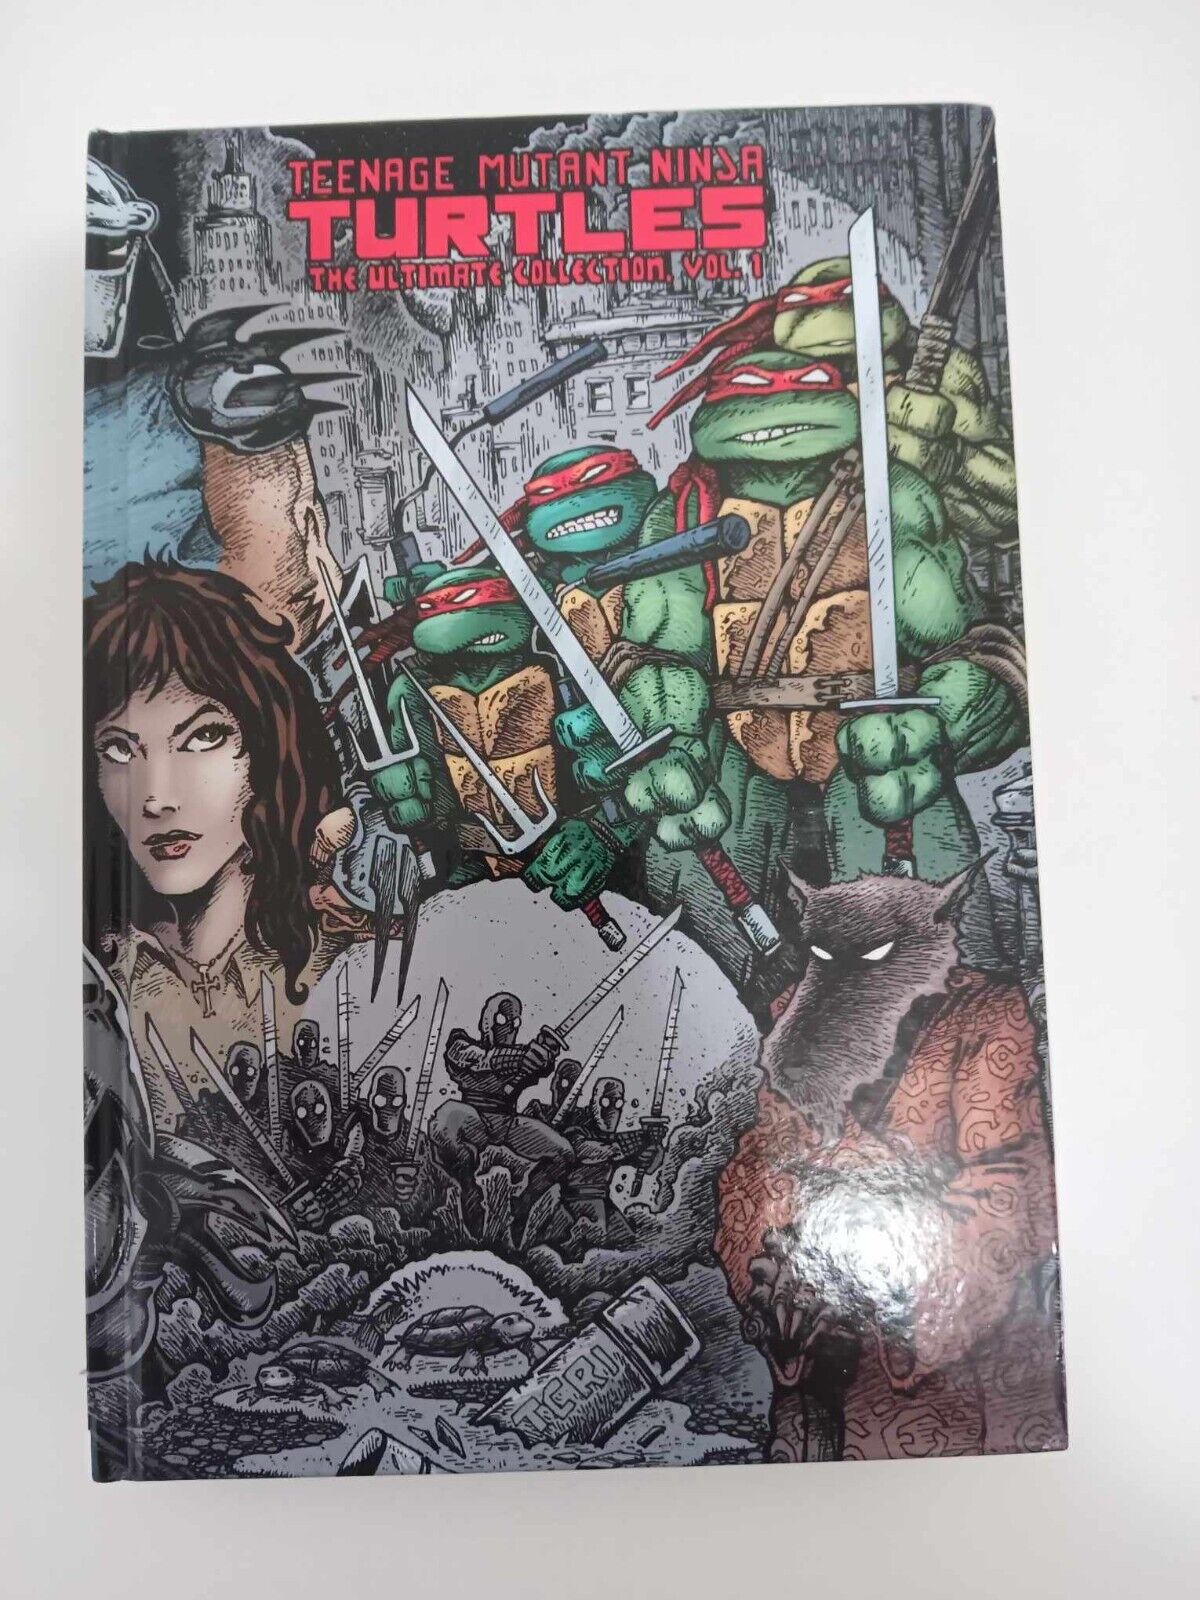 Teenage Mutant Ninja Turtles: The Ultimate Collection Vol 1 Hardcover IDW Book